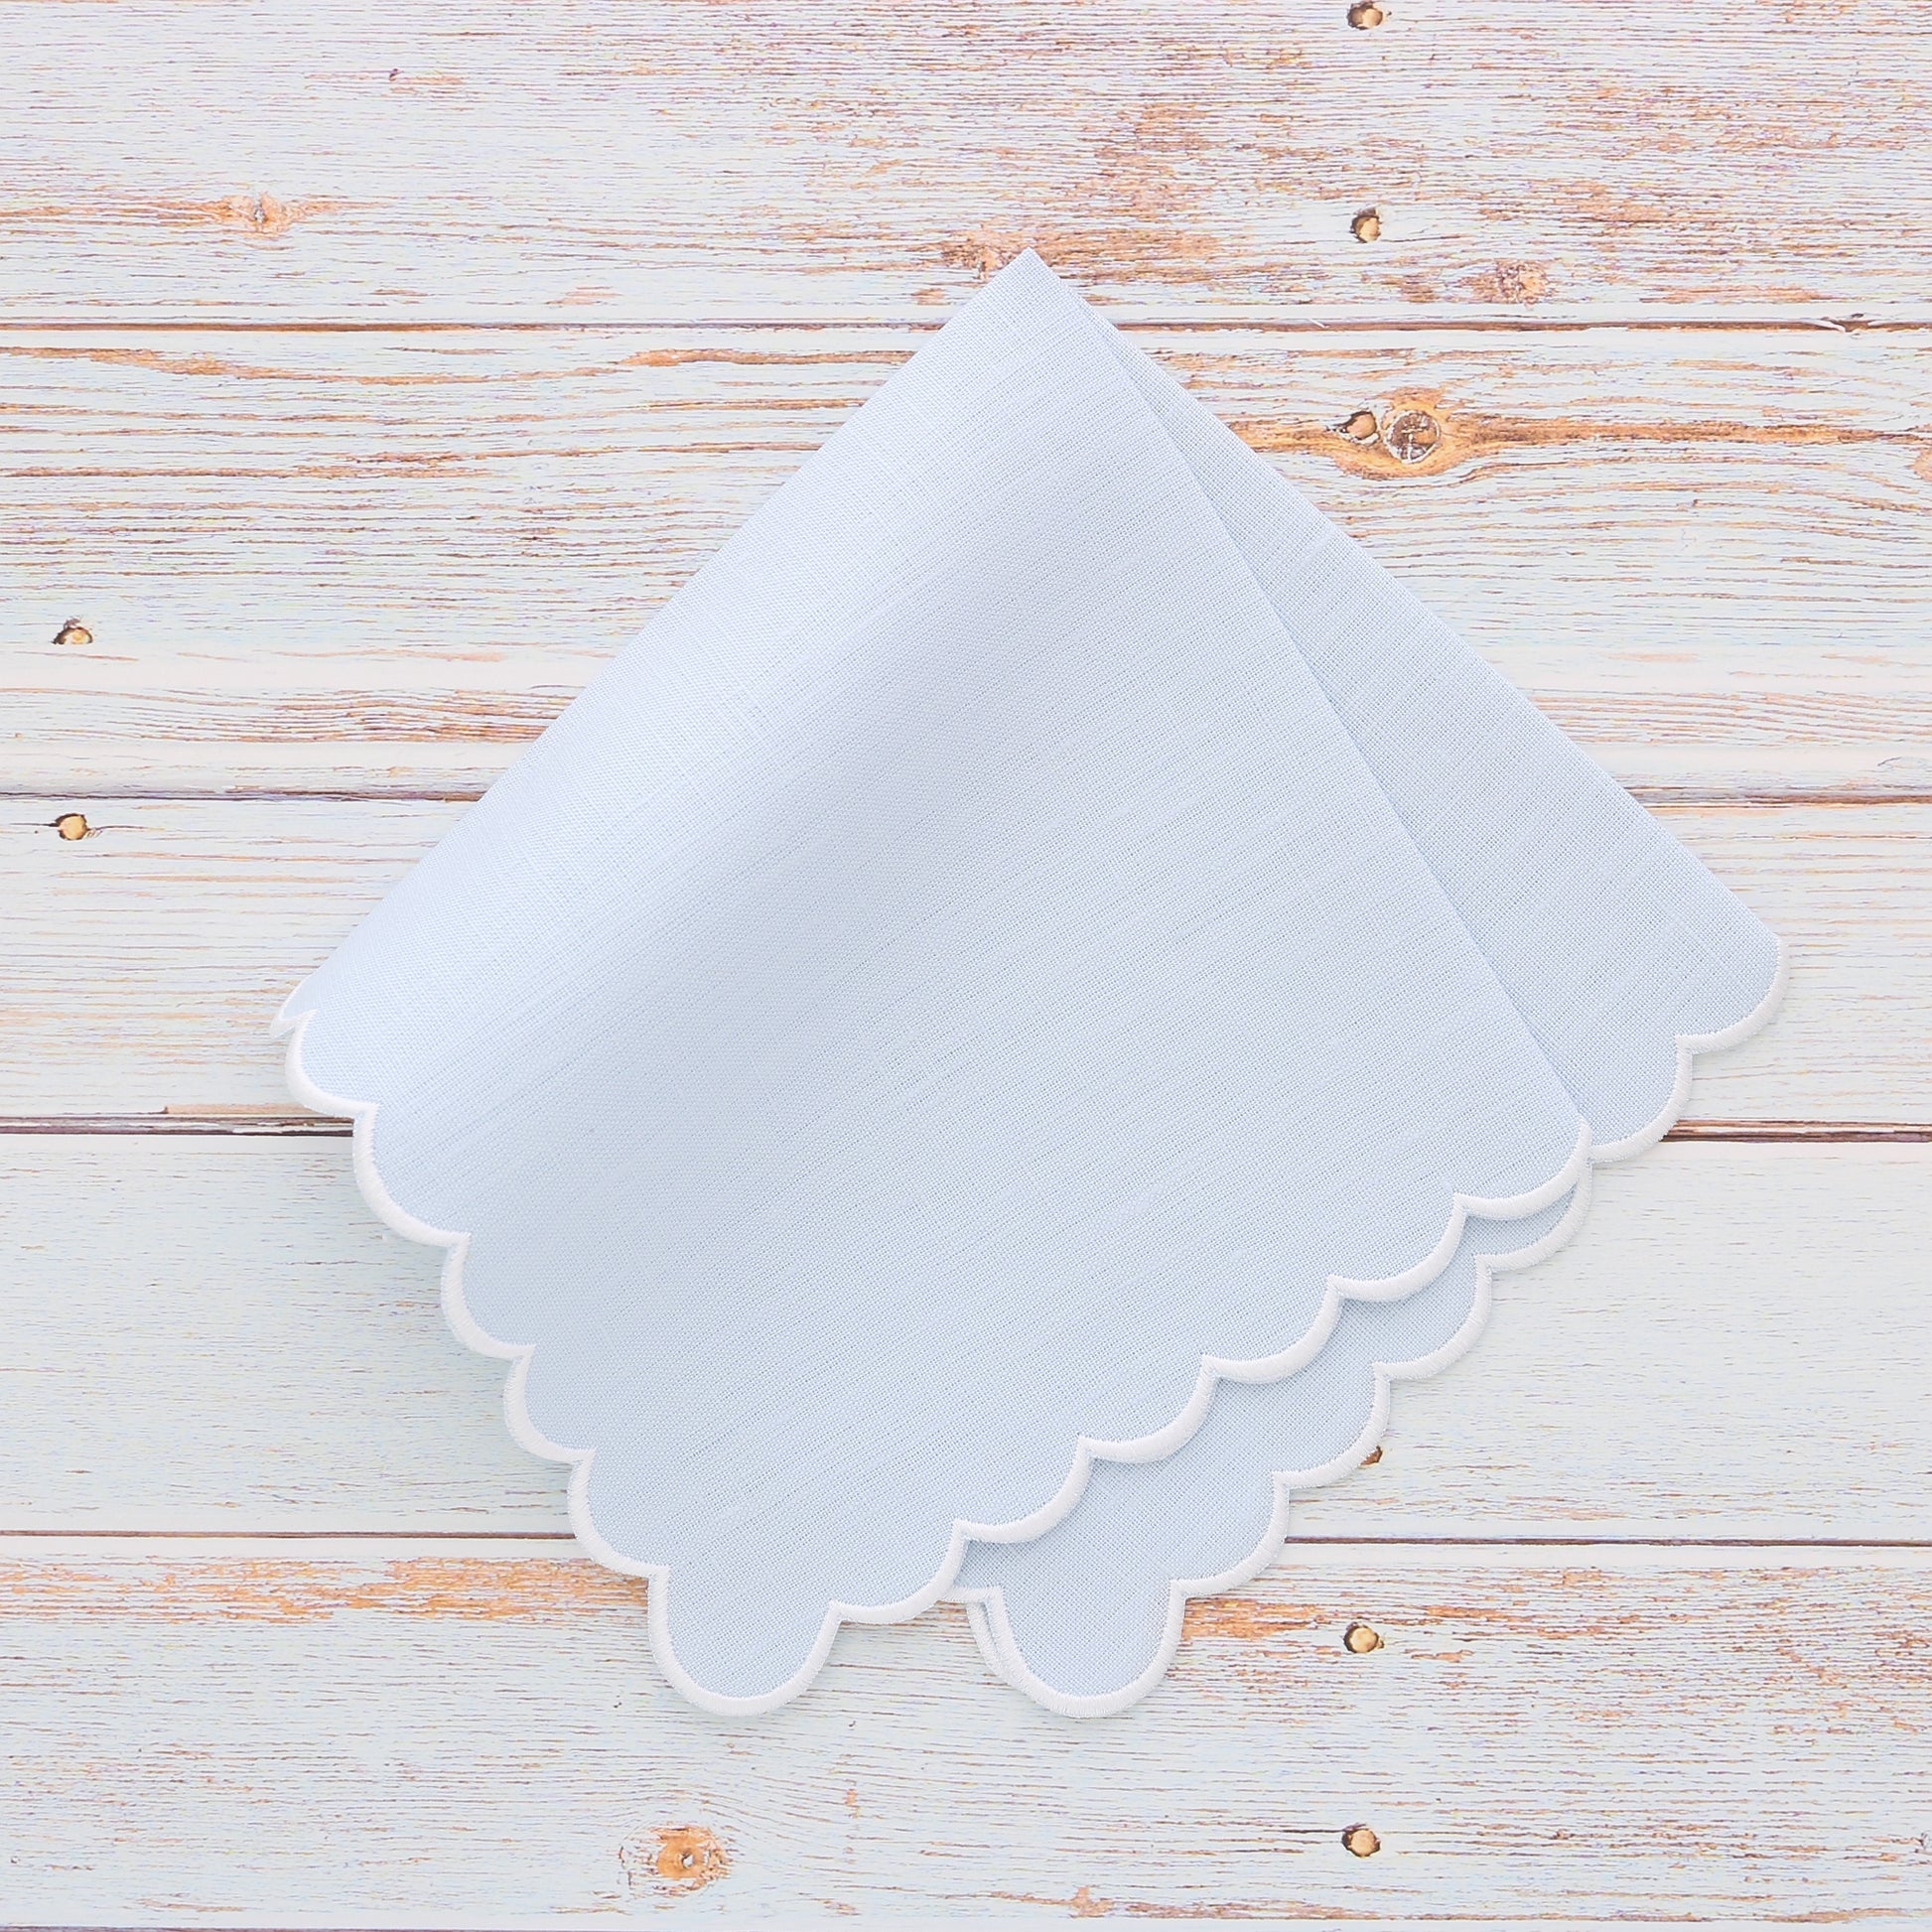 Baby Blue linen handkerchief with White scallops